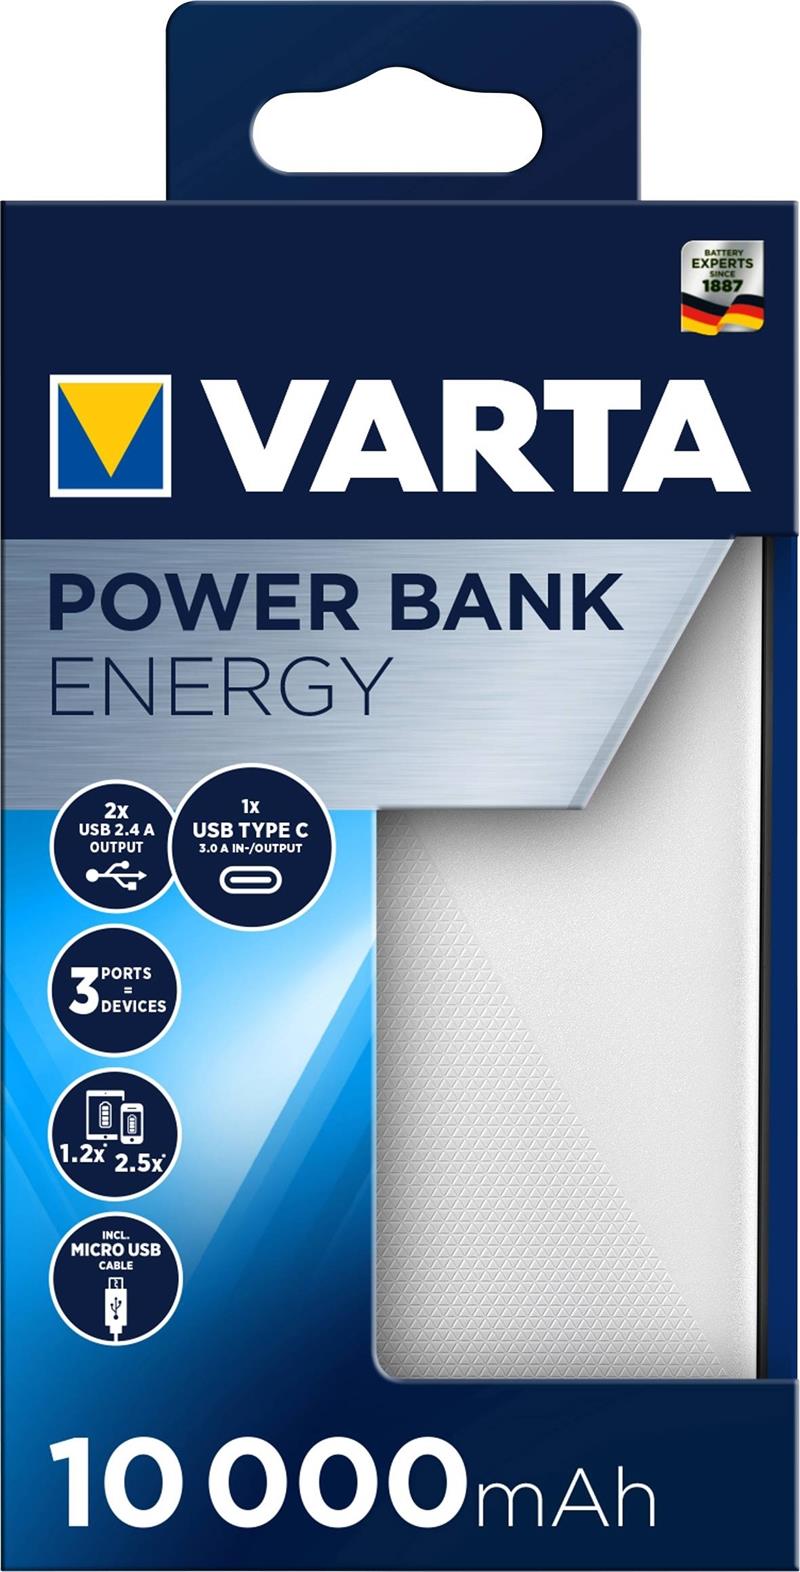 Varta Portable Power Bank Energy 10 000 mAh 15W White